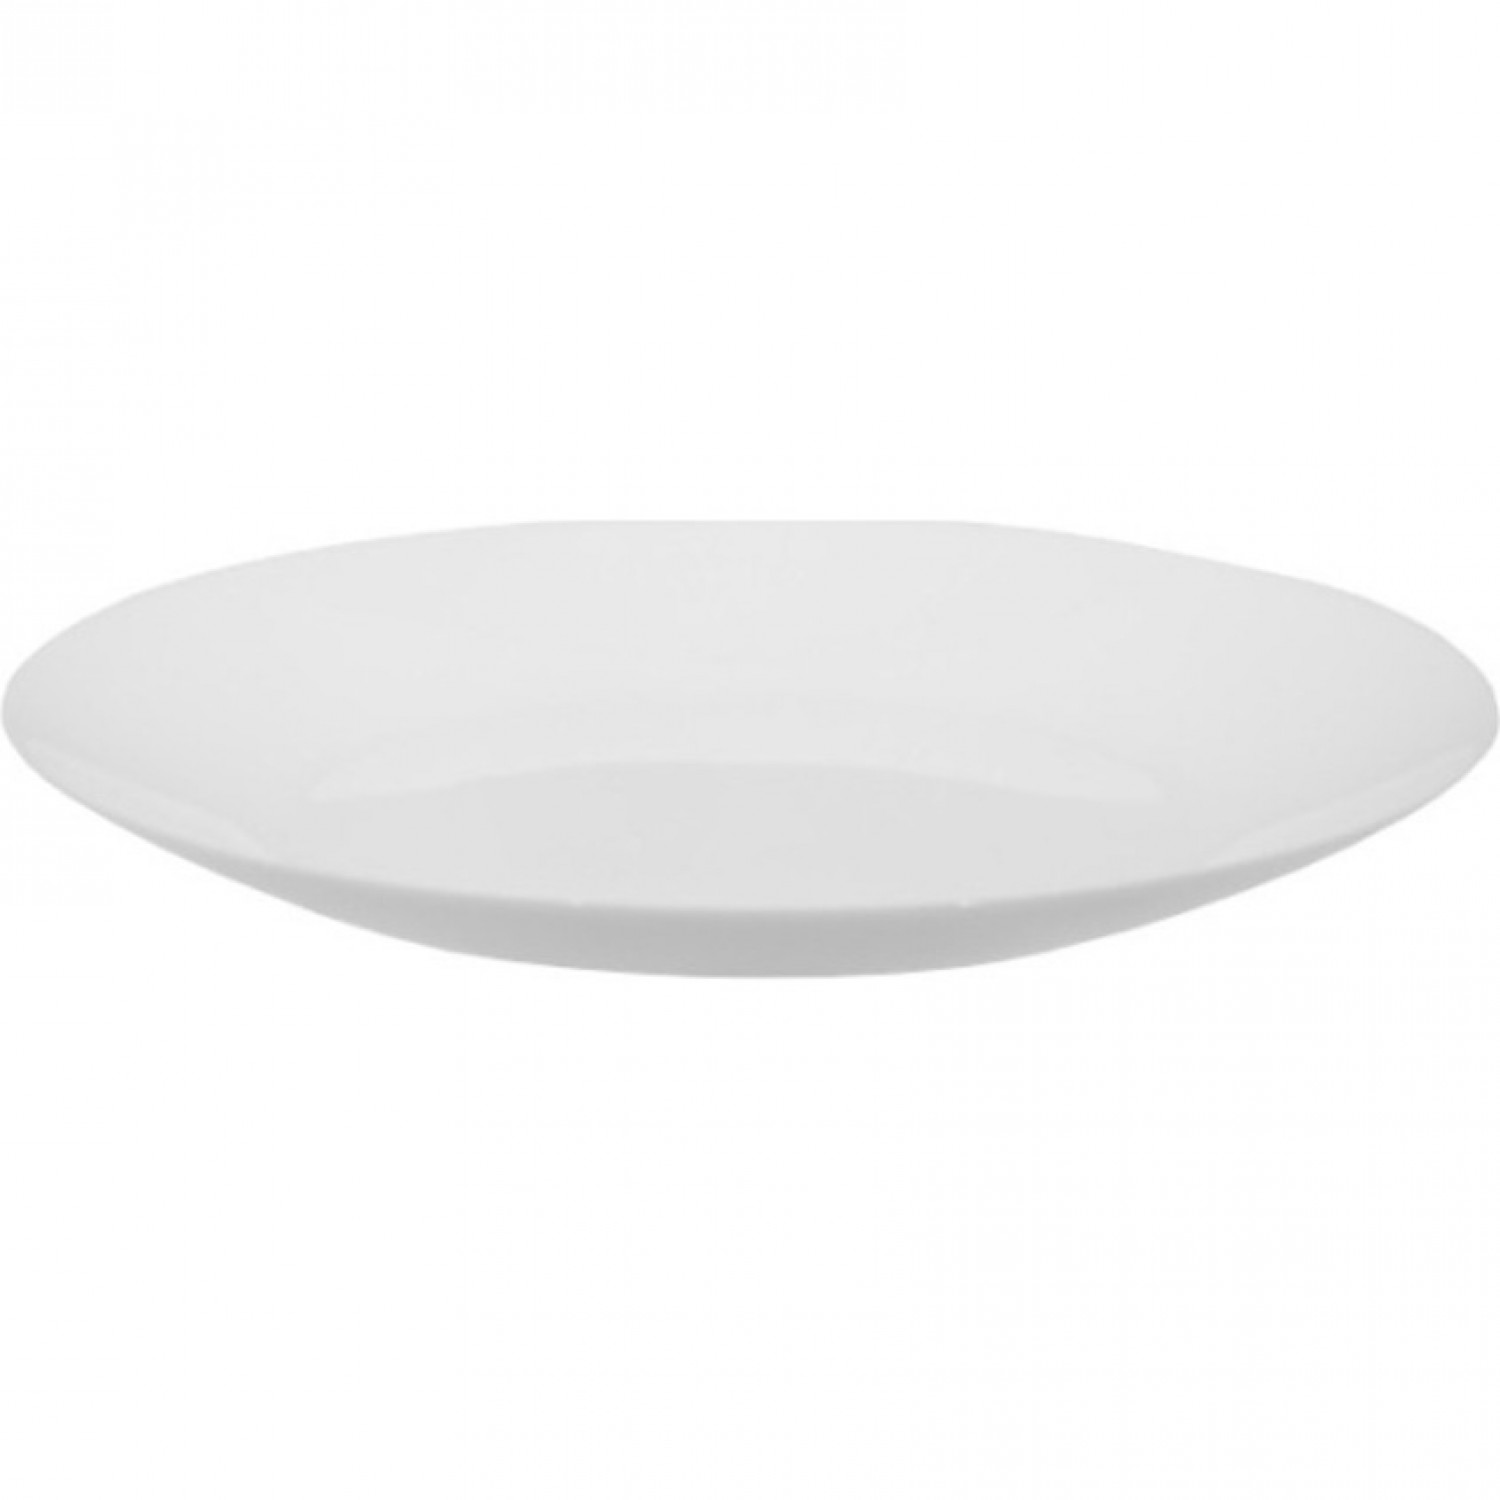 Тарелка обеденная ЛИЛИ БЕЛЫЙ 25см LUMINARC Q8714 тарелка обеденная лили белый 25см luminarc q8714